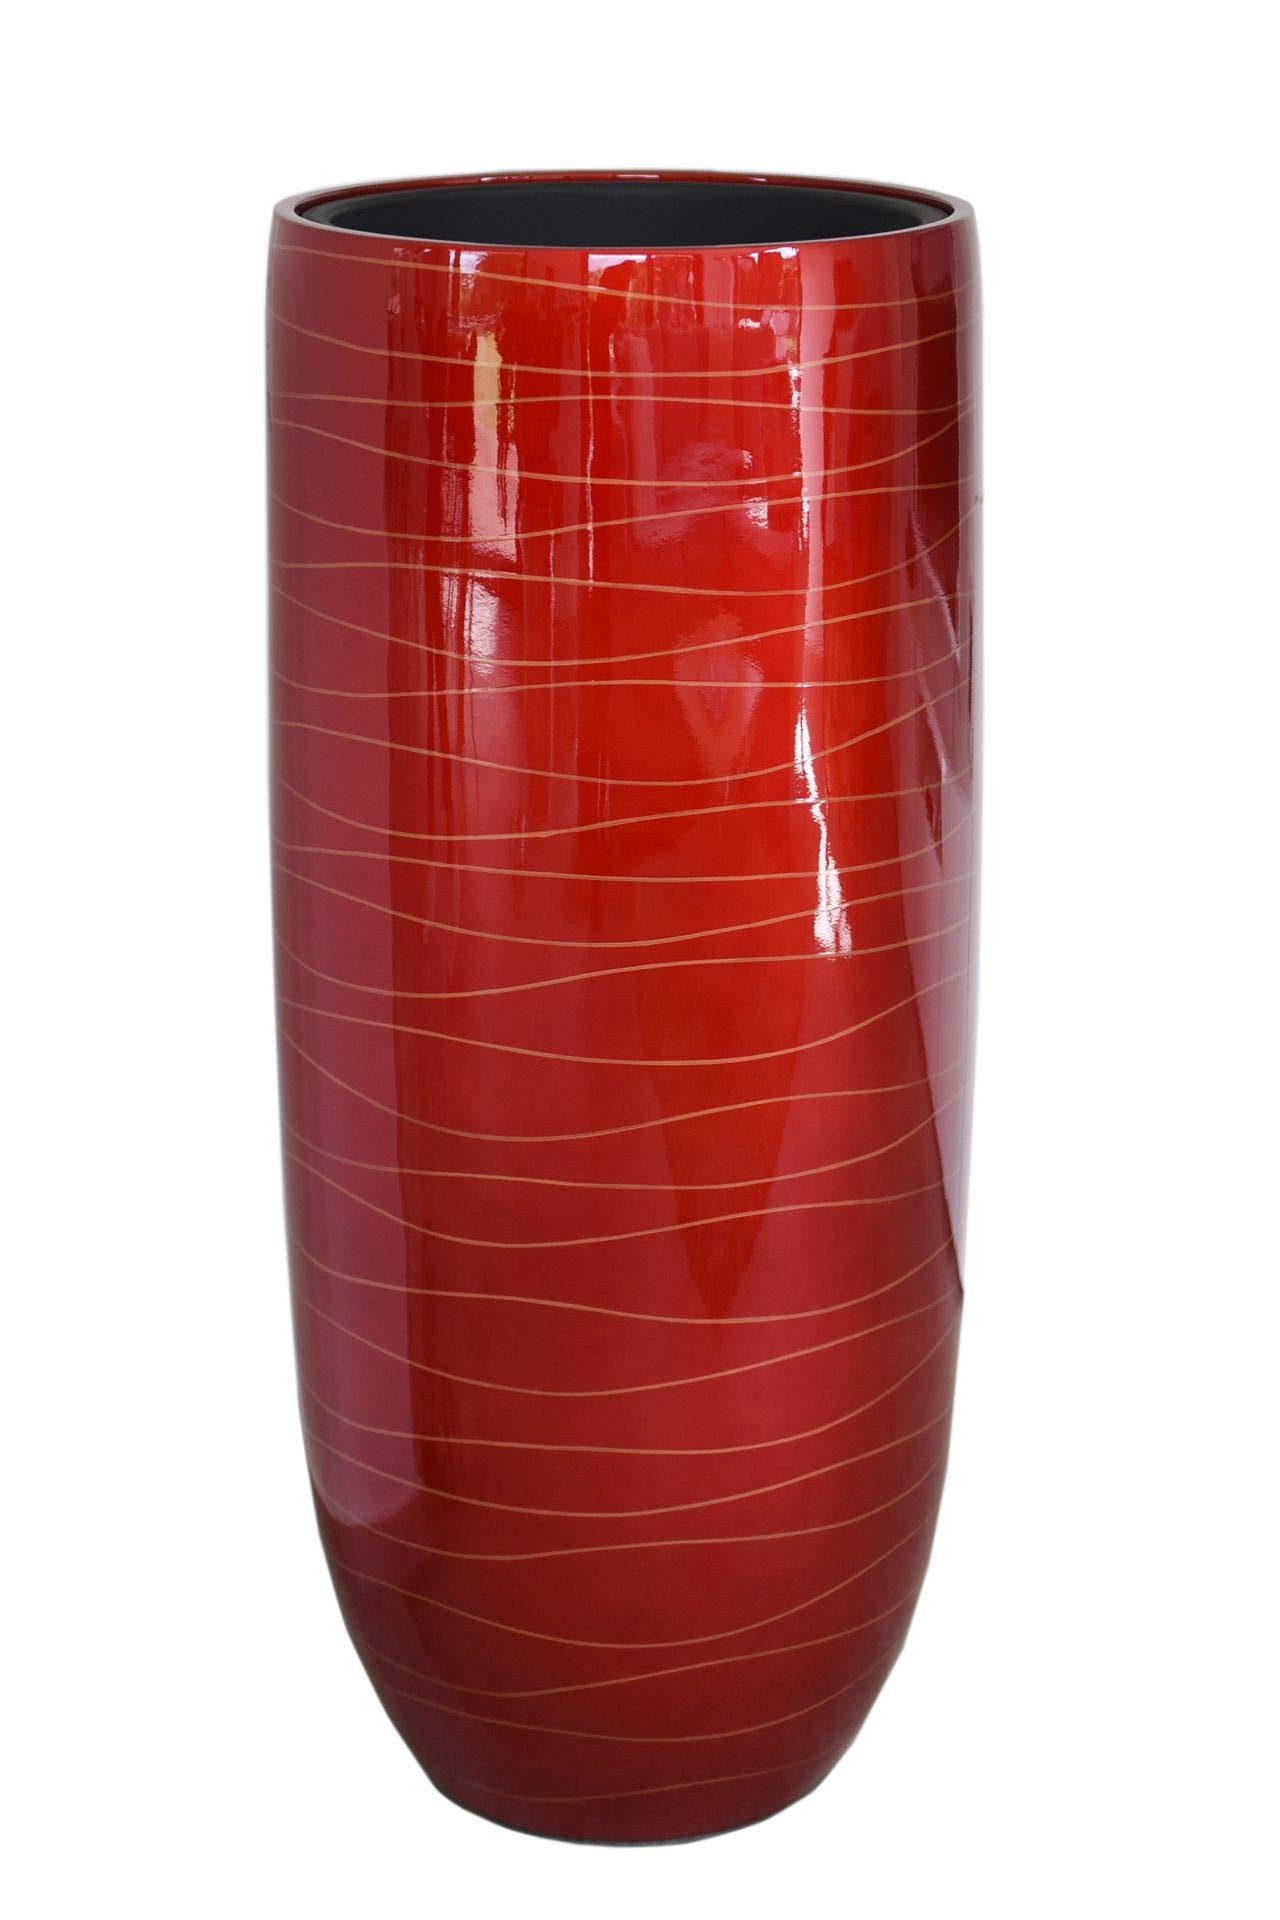 VIVANNO Pflanzkübel Pflanzkübel Blumenkübel exklusiv "Asconia" Rot Gold Hochglanz - 39x95